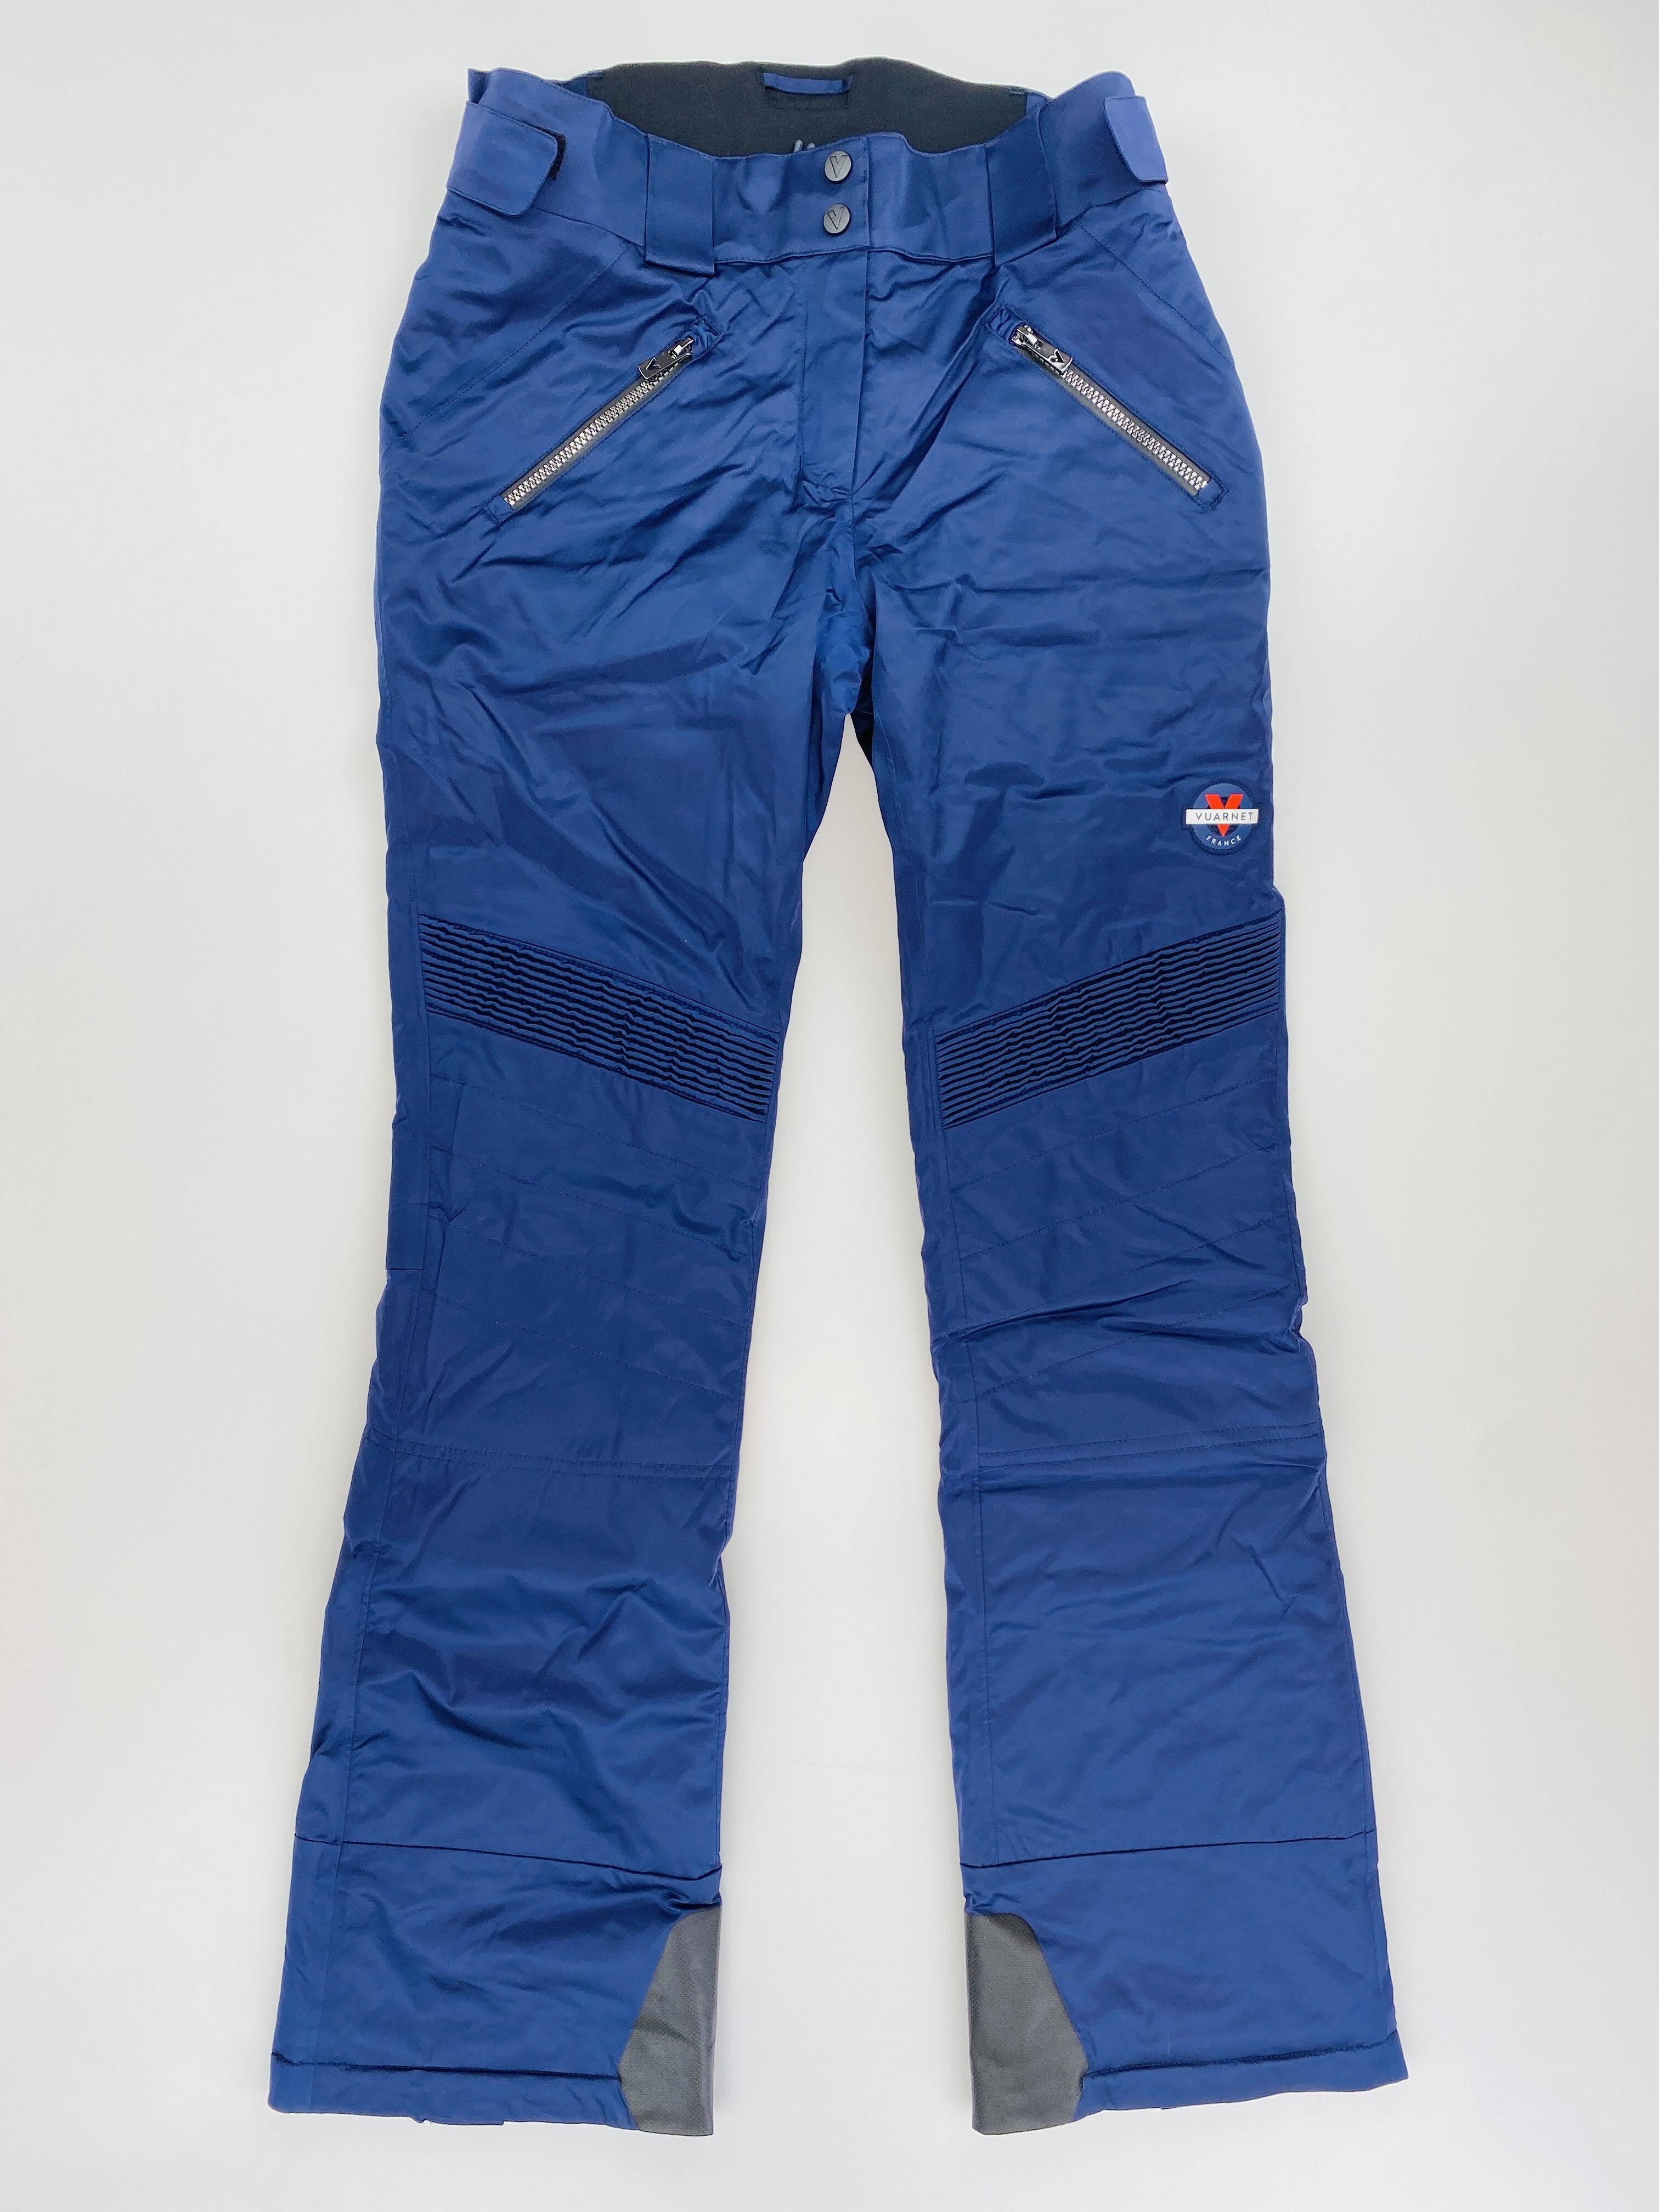 Vuarnet W'S Yakima Pant - Pantaloni da sci di seconda mano - Donna - Blu - S | Hardloop